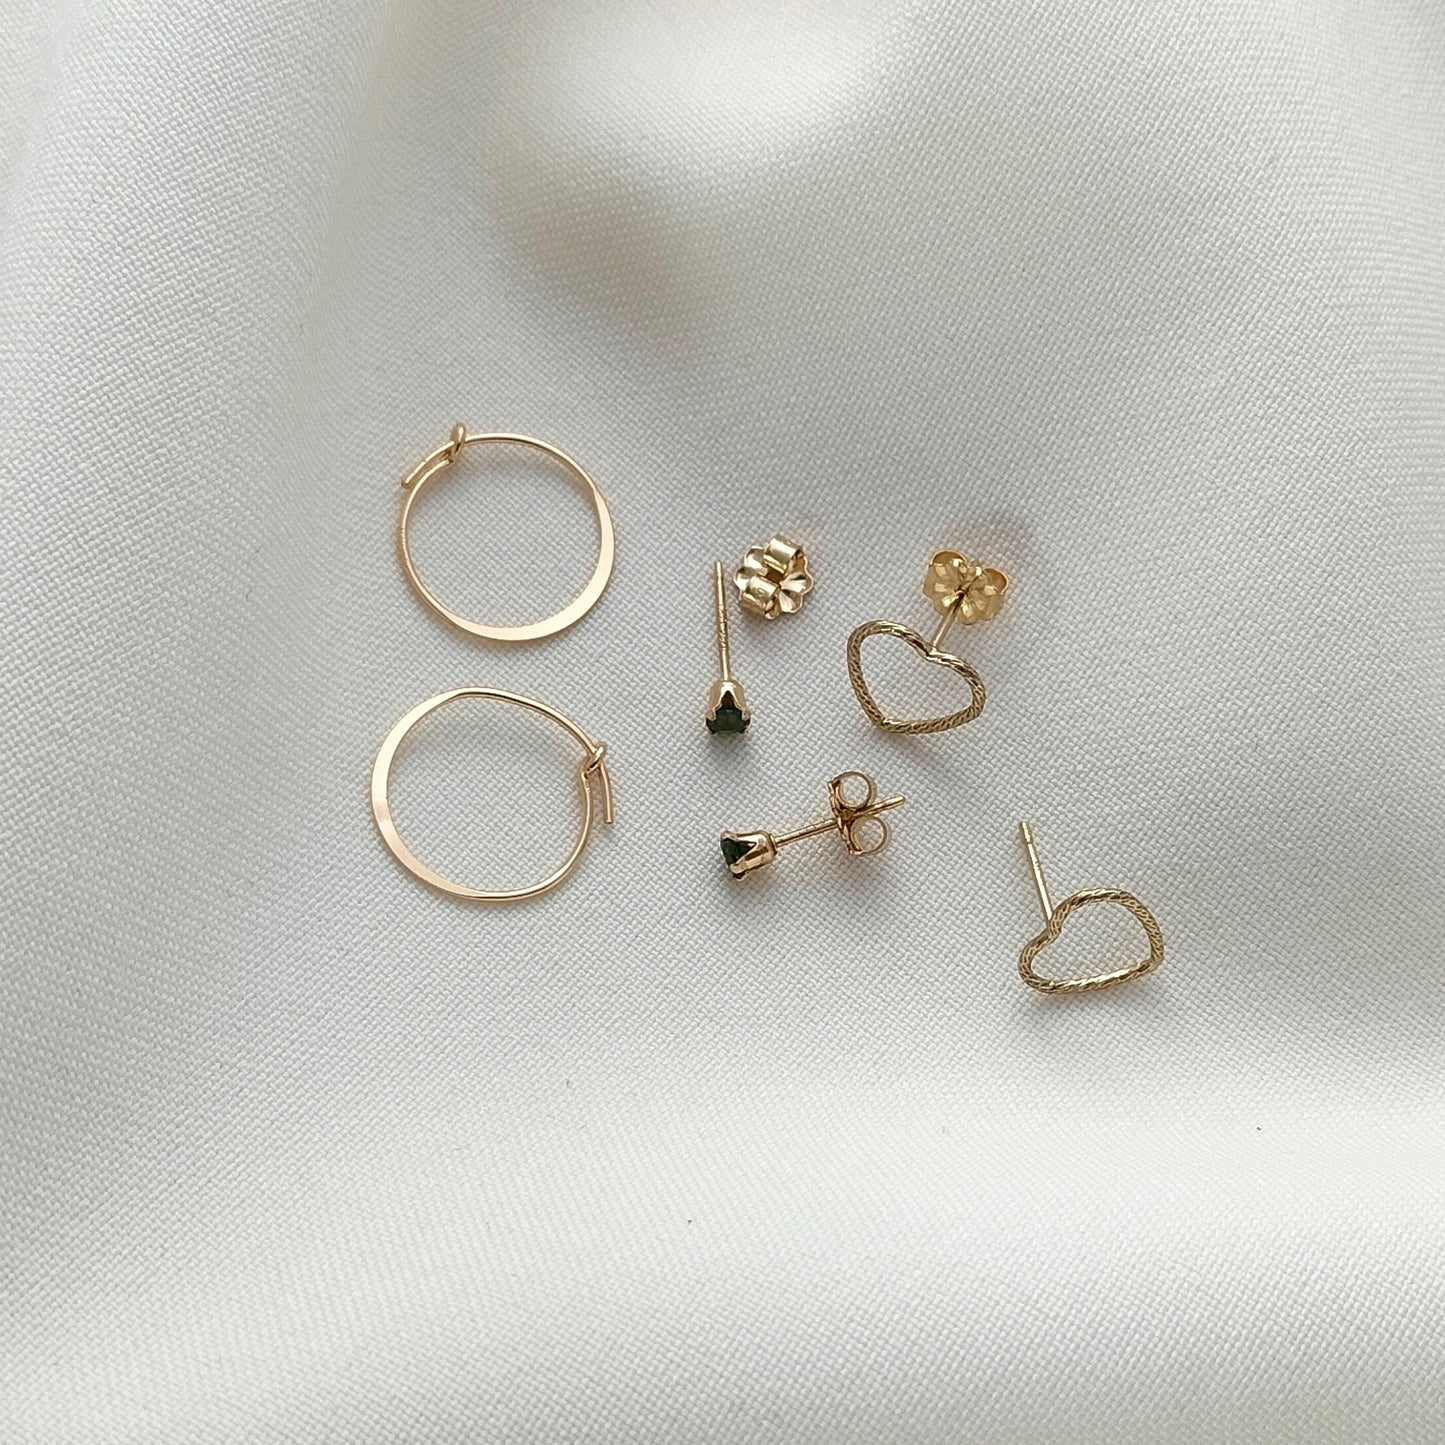 Gold Heart earring set